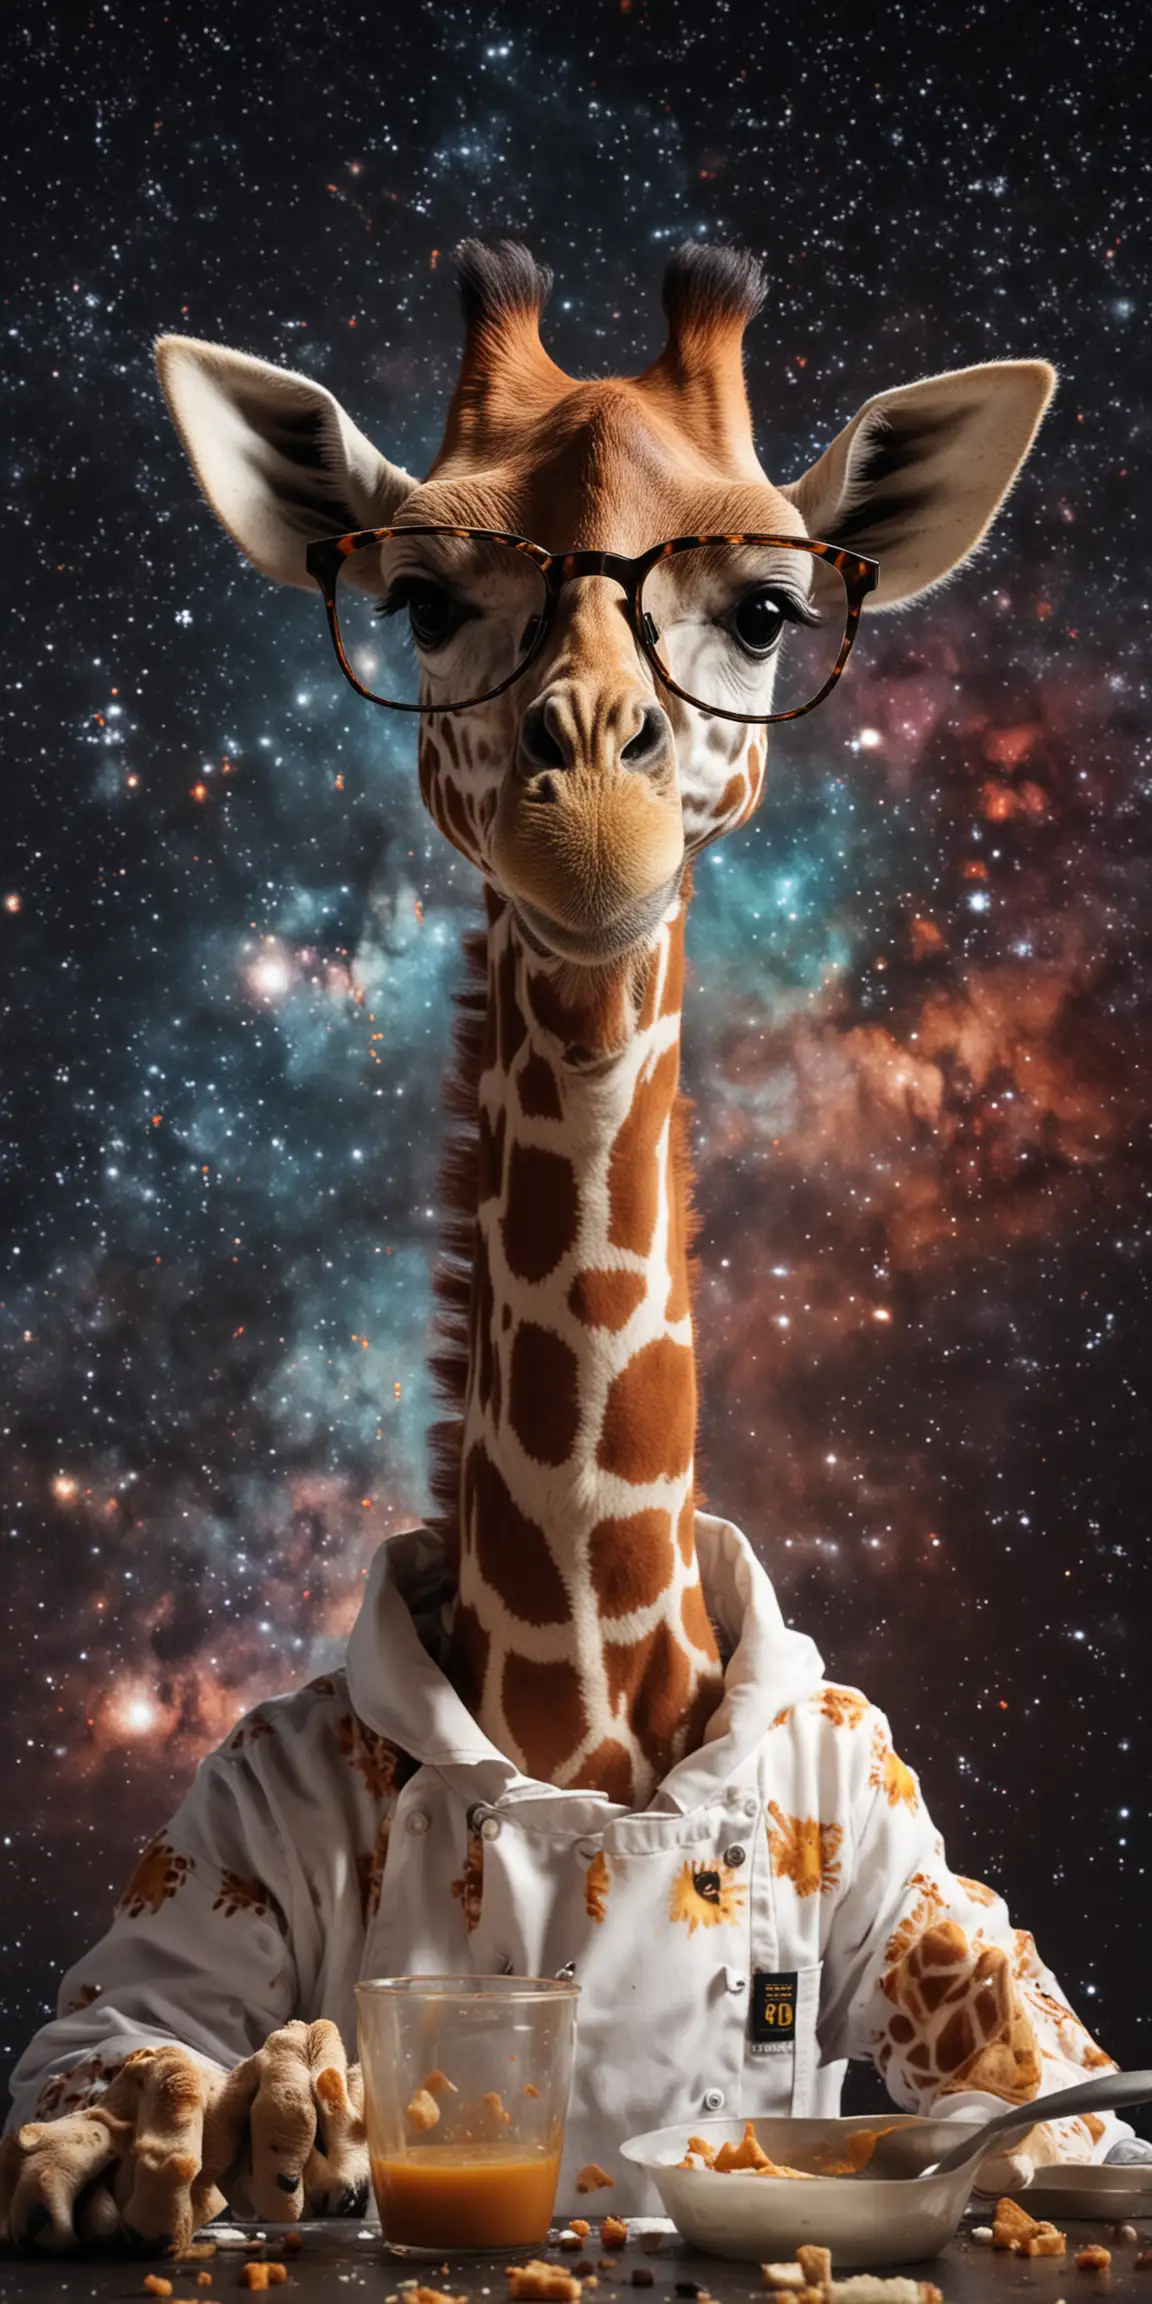 Baby Giraffe Wearing Glasses in Space Cooking Adventure